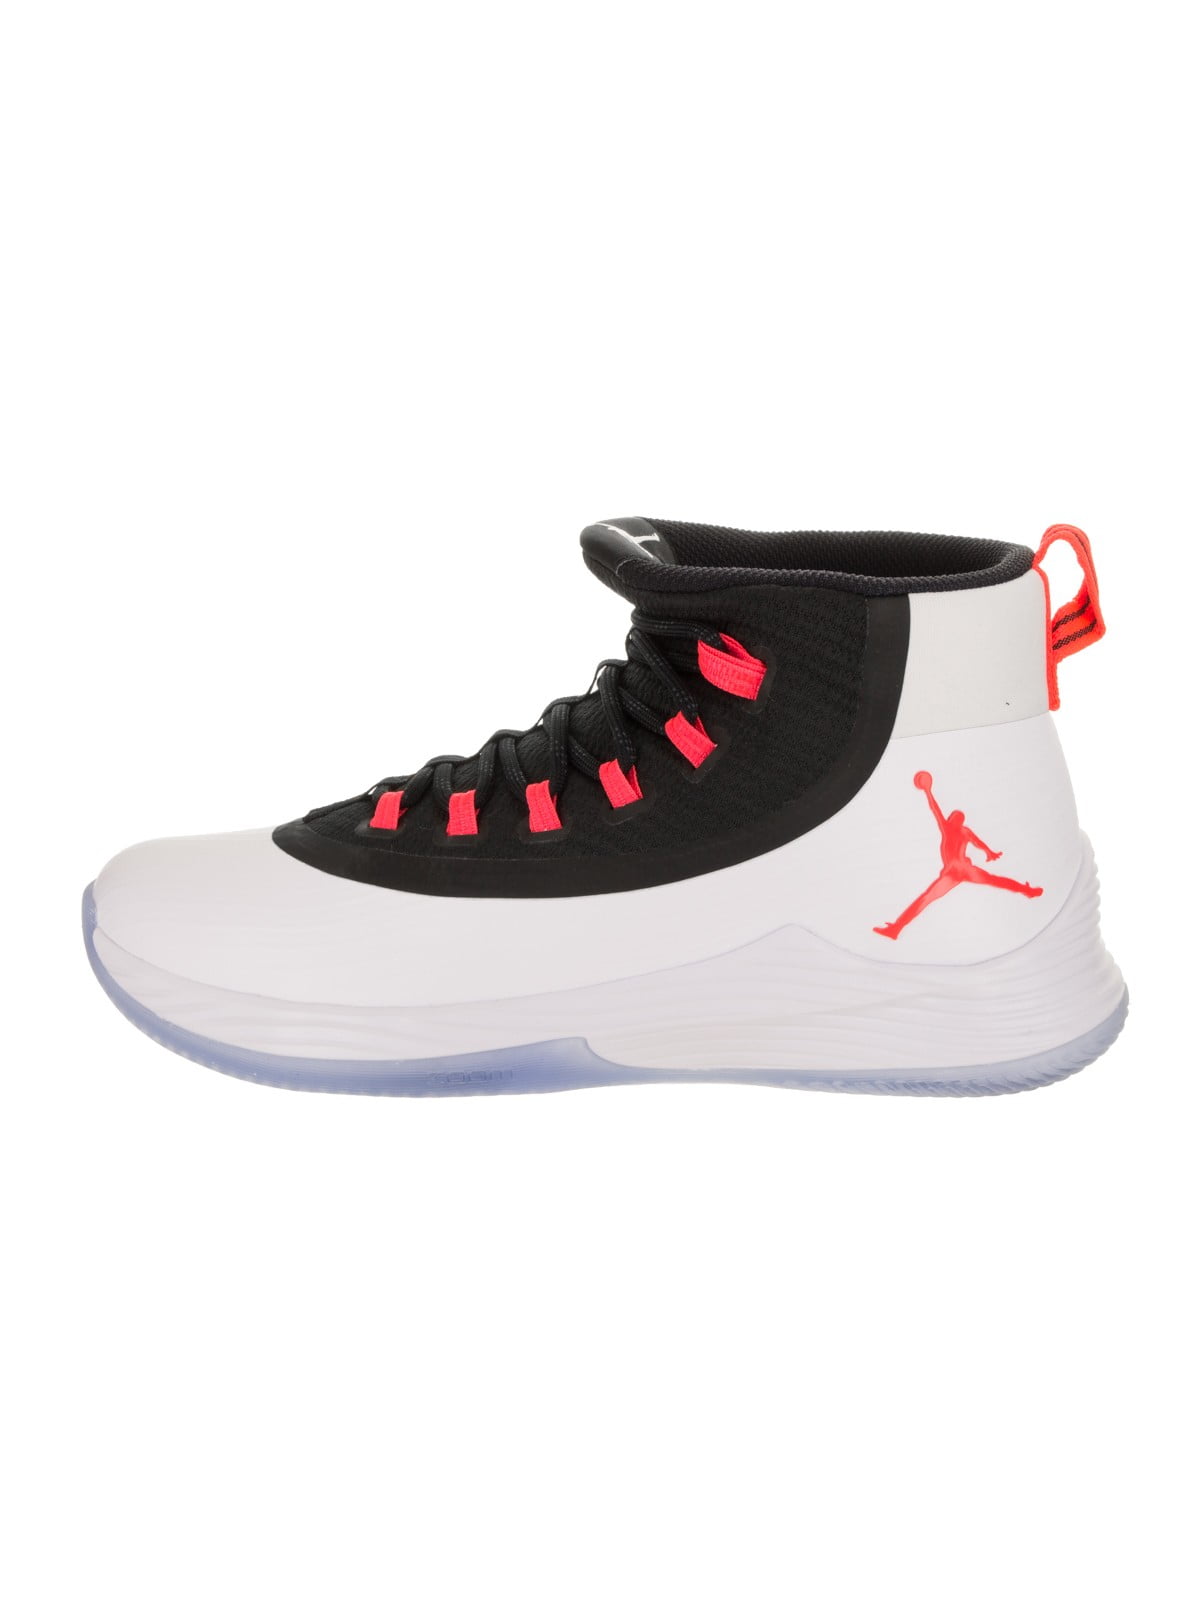 Jordan Men's Jordan Ultra Fly Basketball Shoe - Walmart.com